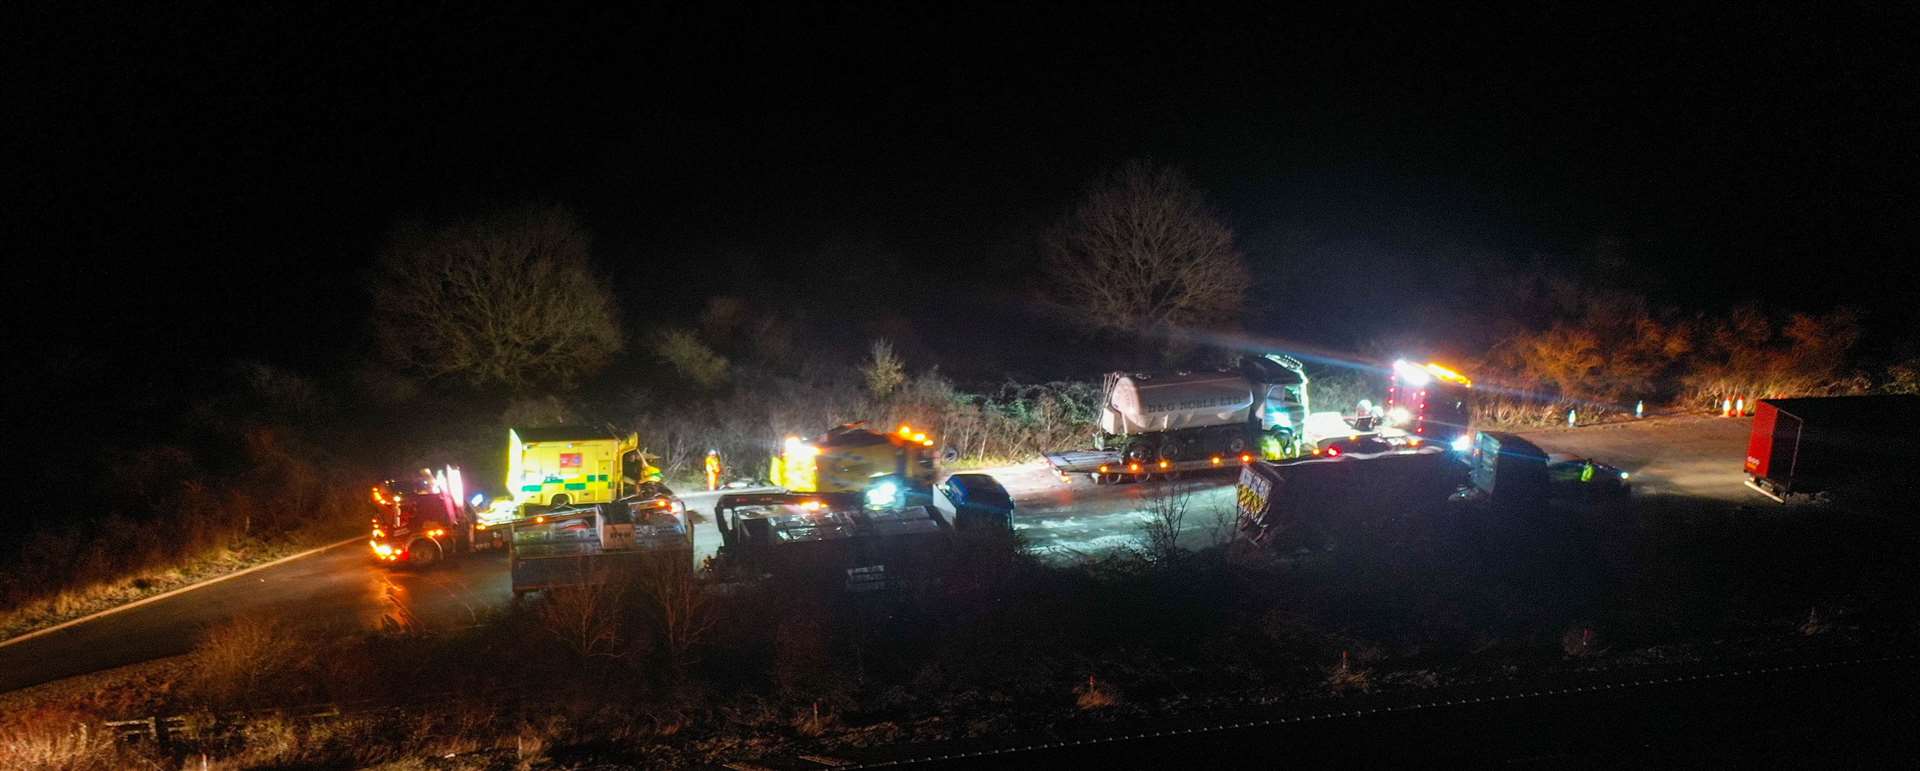 The crash happened on the A21 near Tonbridge Picture: UKNIP